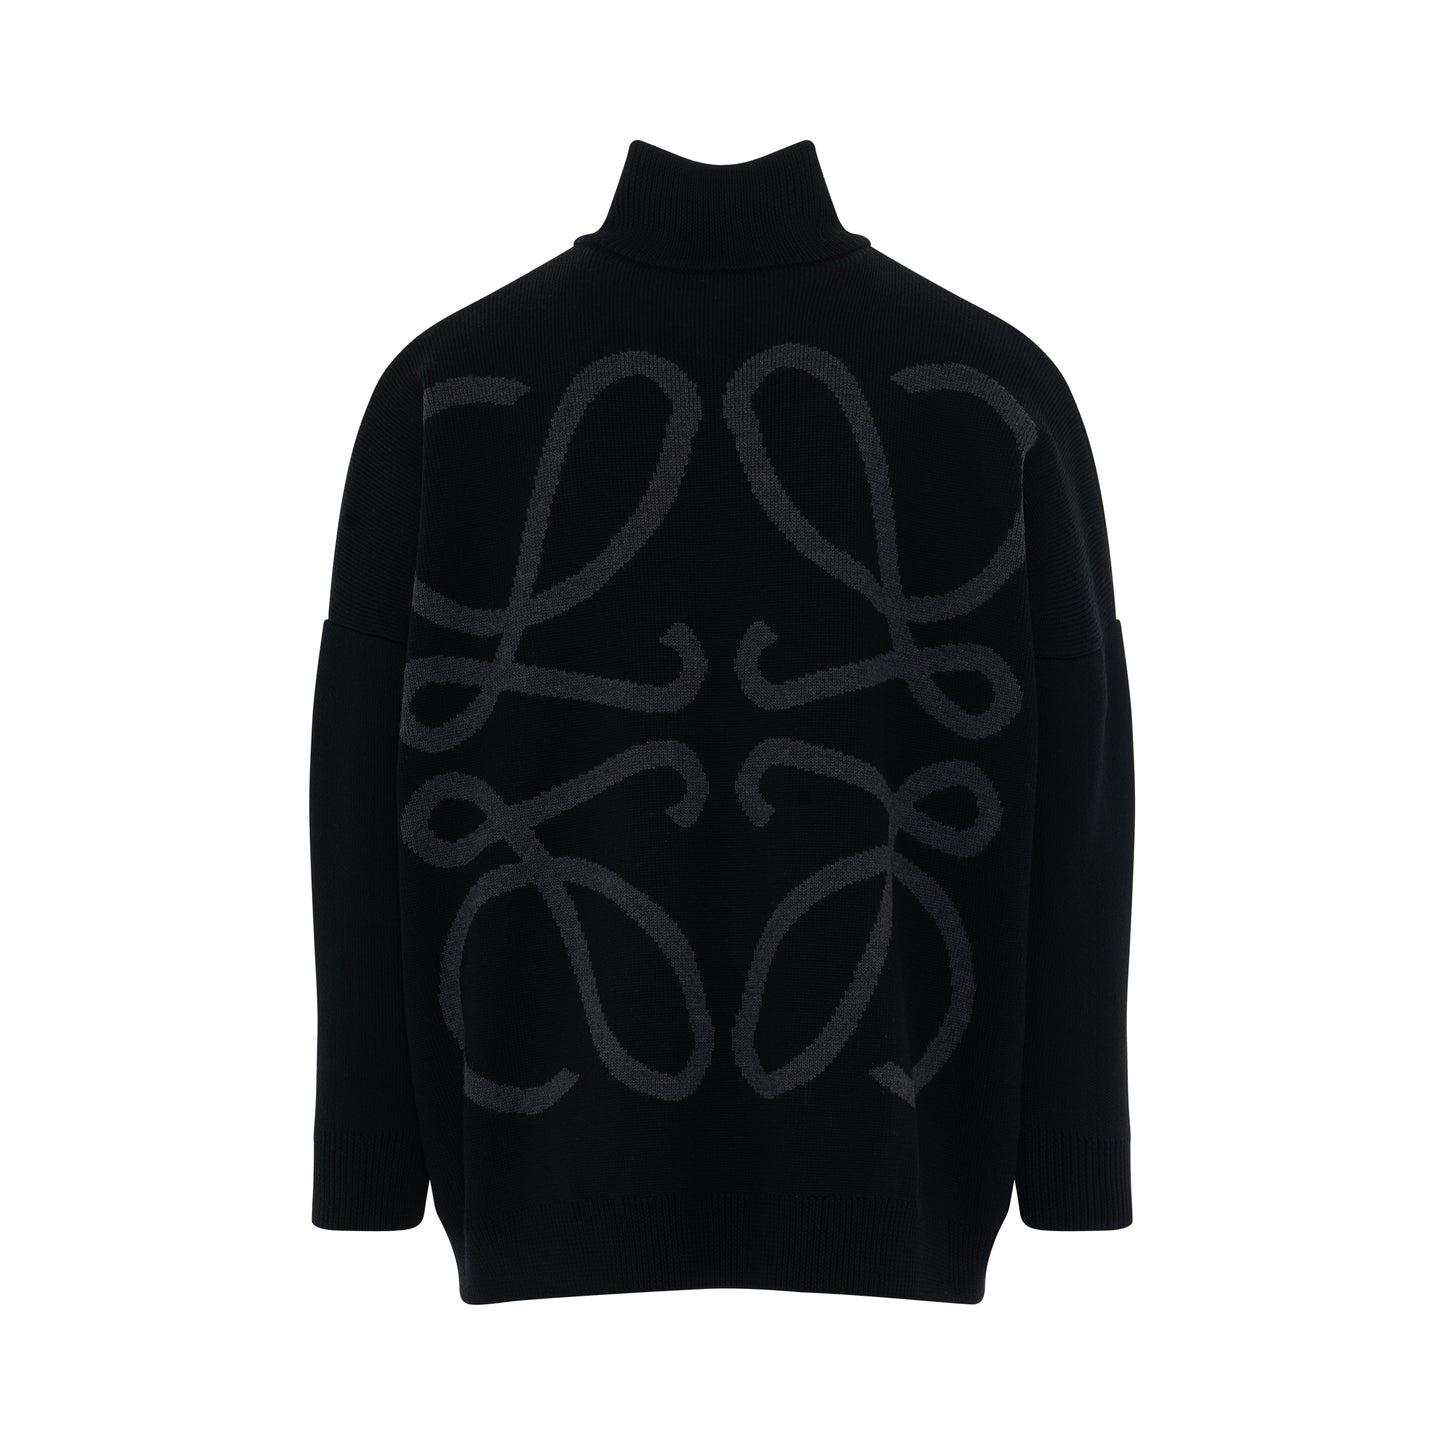 Anagram Zipped Pullover in Black